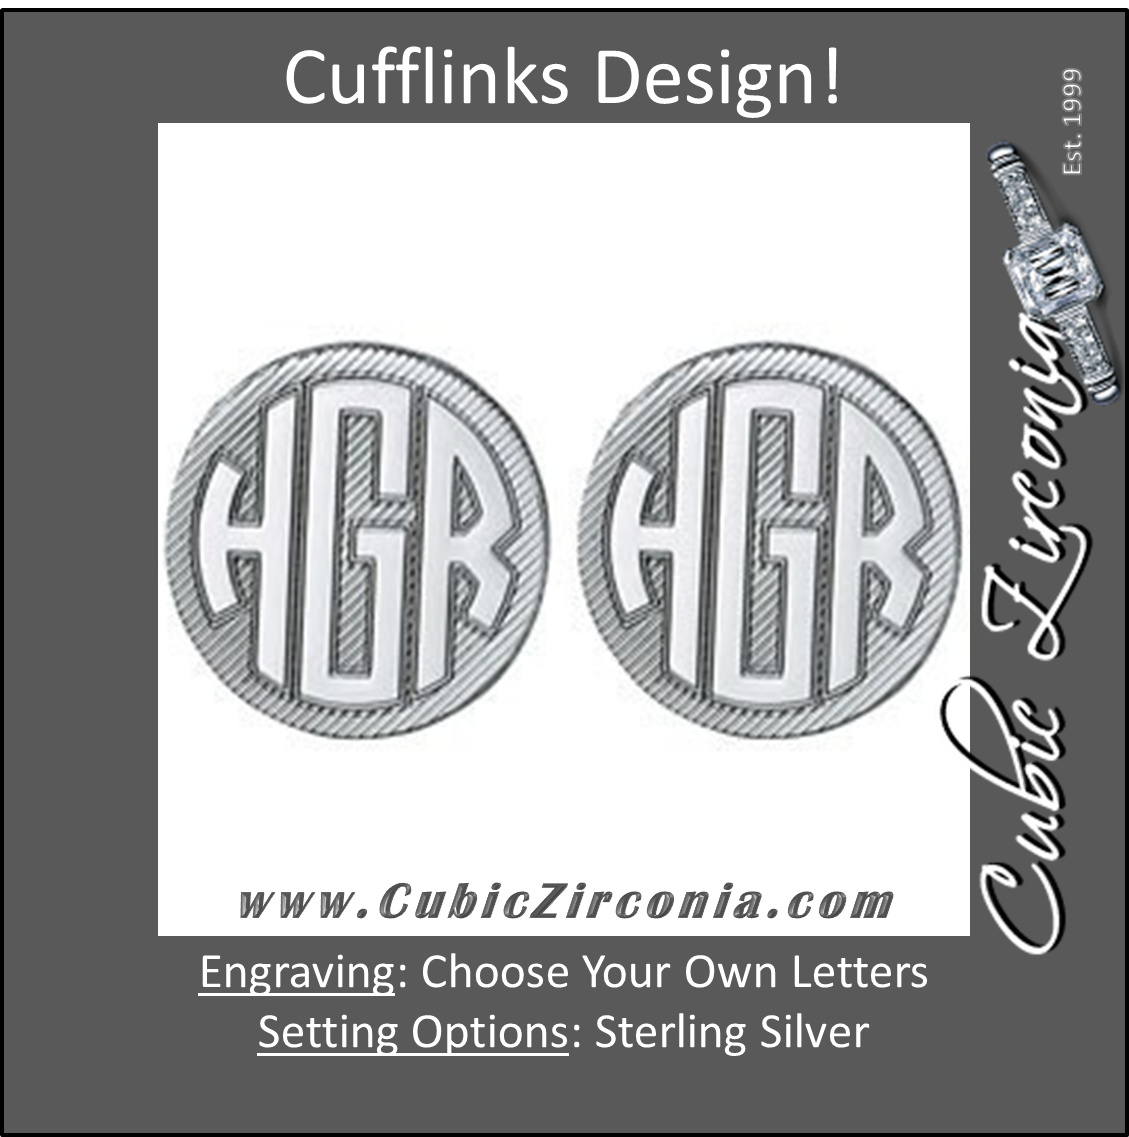 Men's Cufflinks- Customizable Monogram, Circle Style with Brushed Metal Design